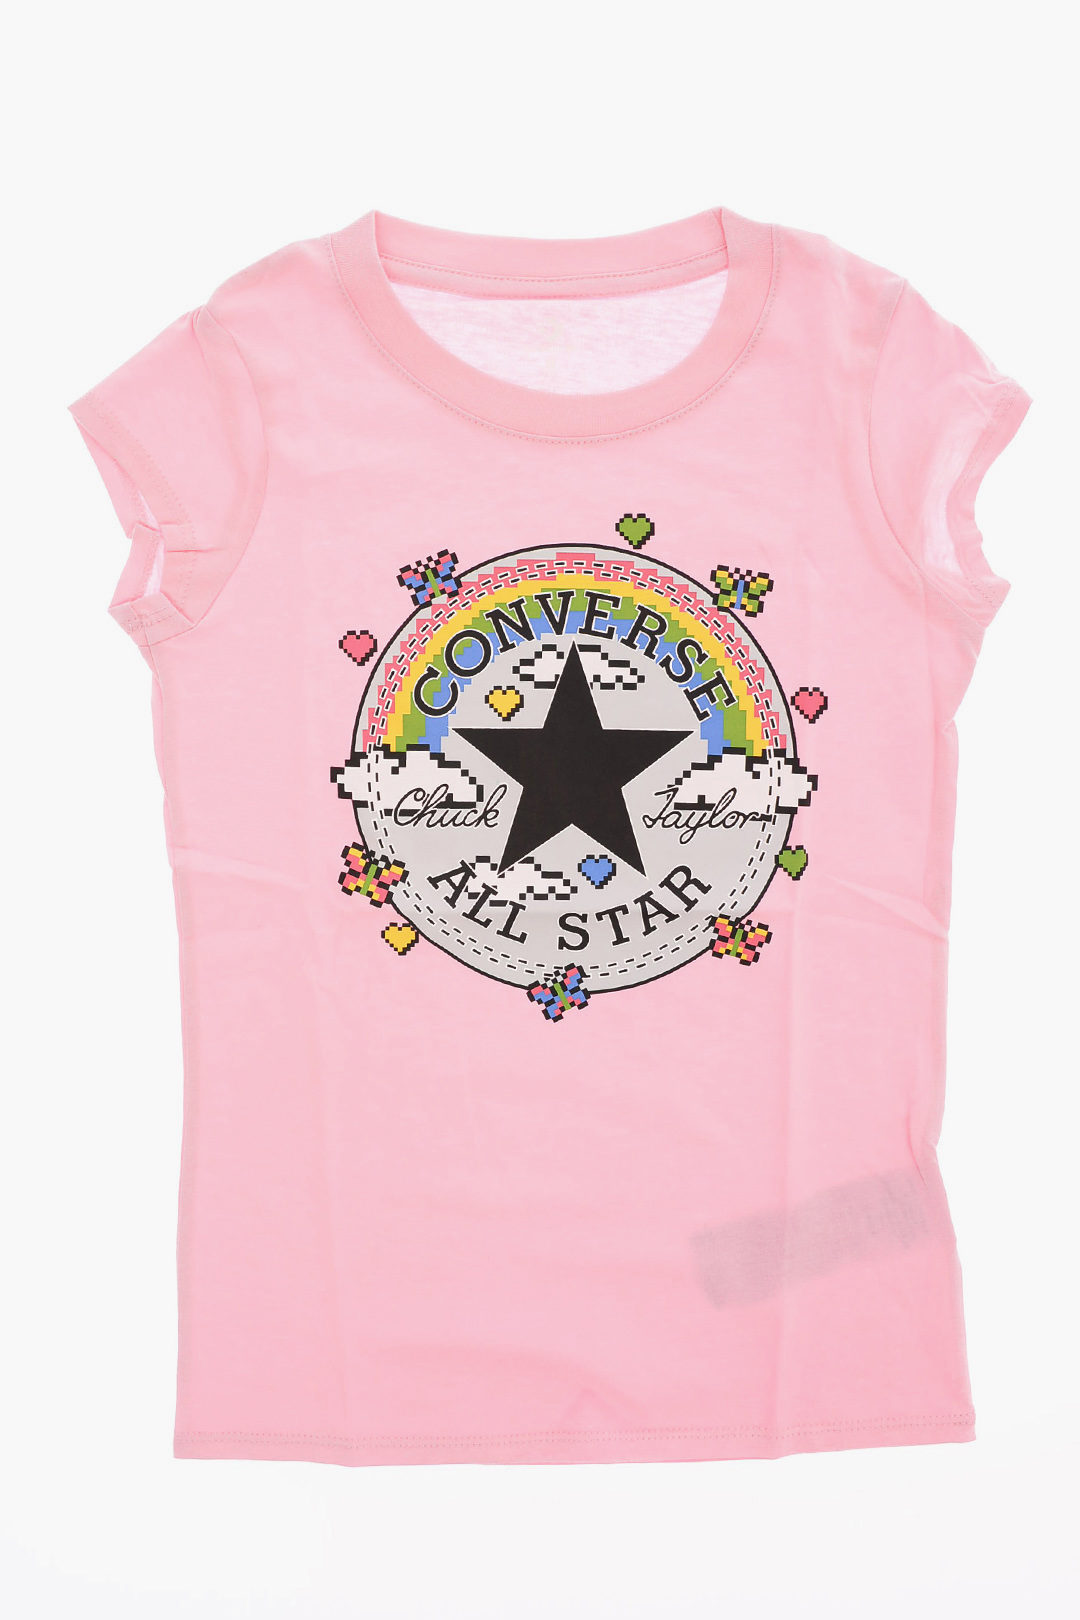 ALL STAR Logo-Print t-shirt girls - Glamood Outlet